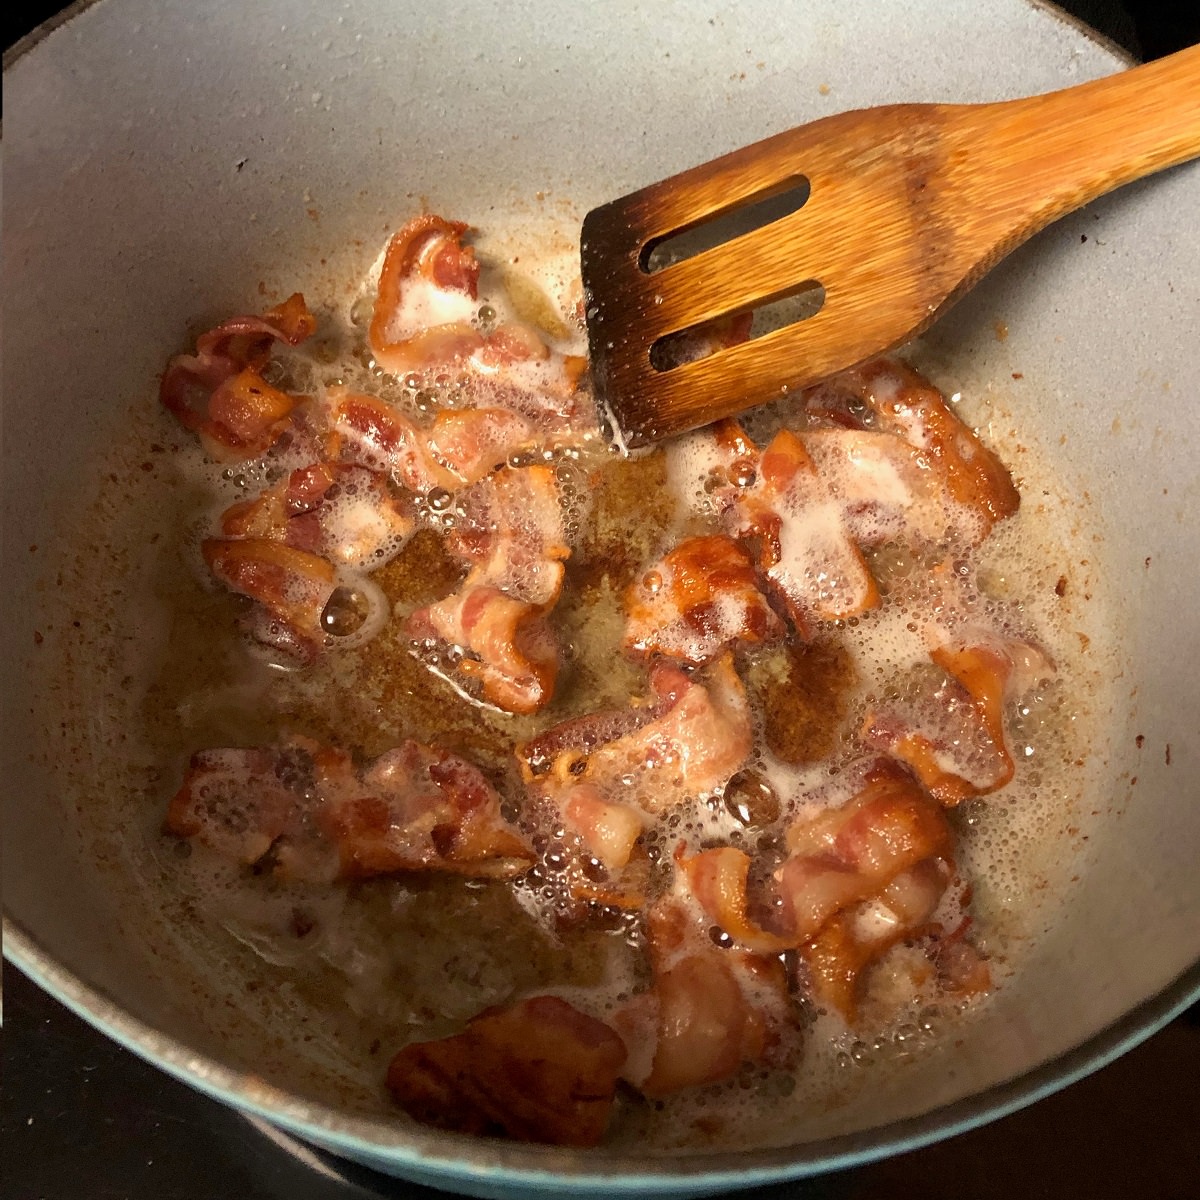 Cook bacon until crispy